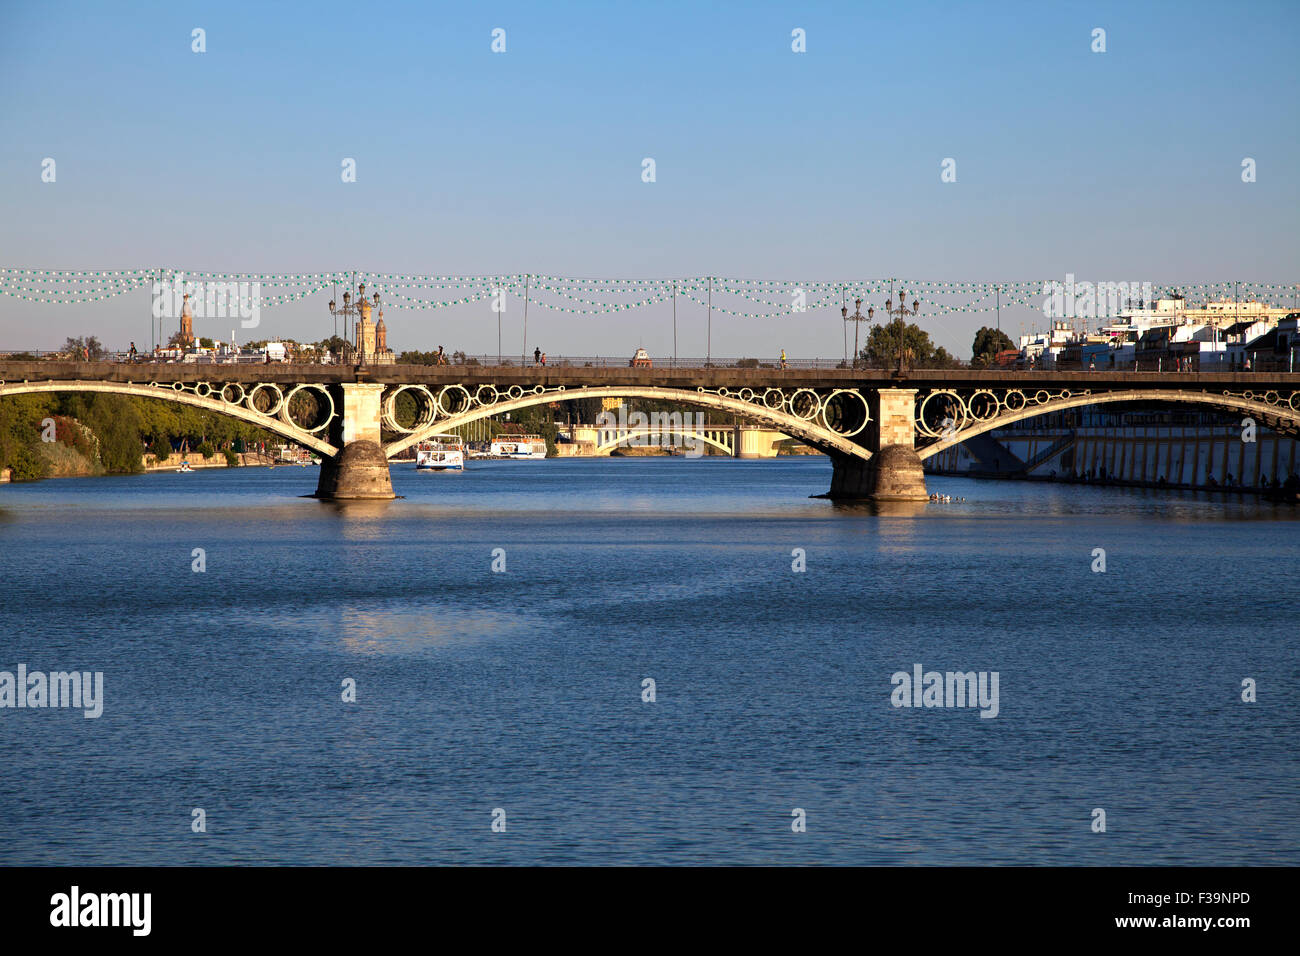 Triana (Eifel) bridge in Seville, Spain Stock Photo